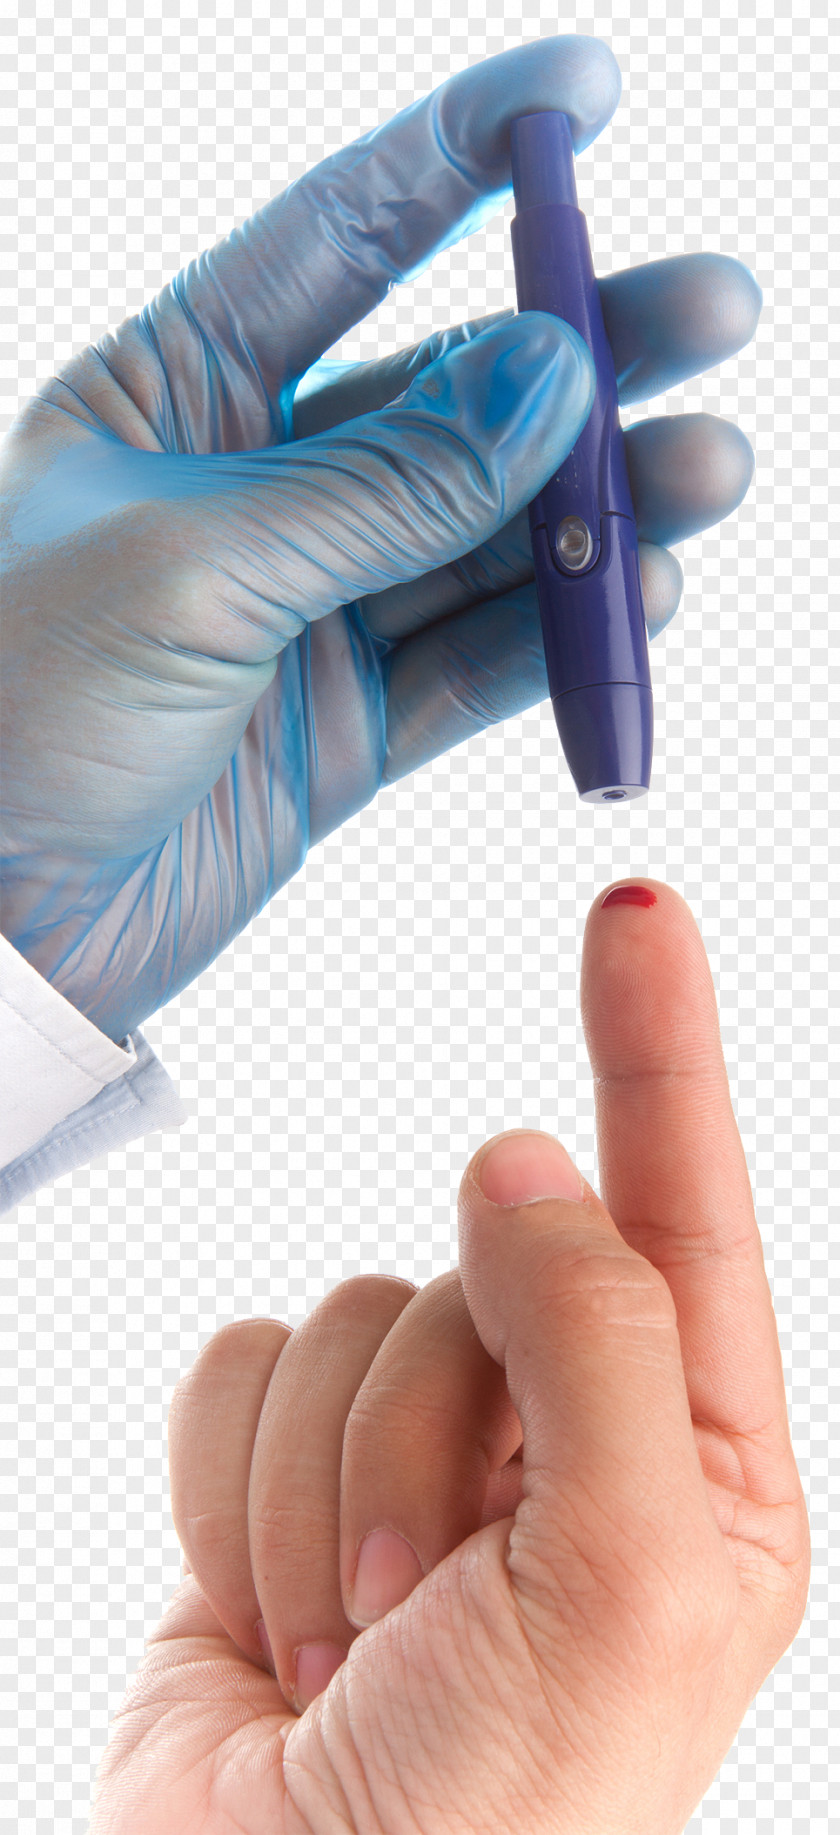 Blood Test Equipment Sugar Glucose Diabetes Mellitus Lancet PNG